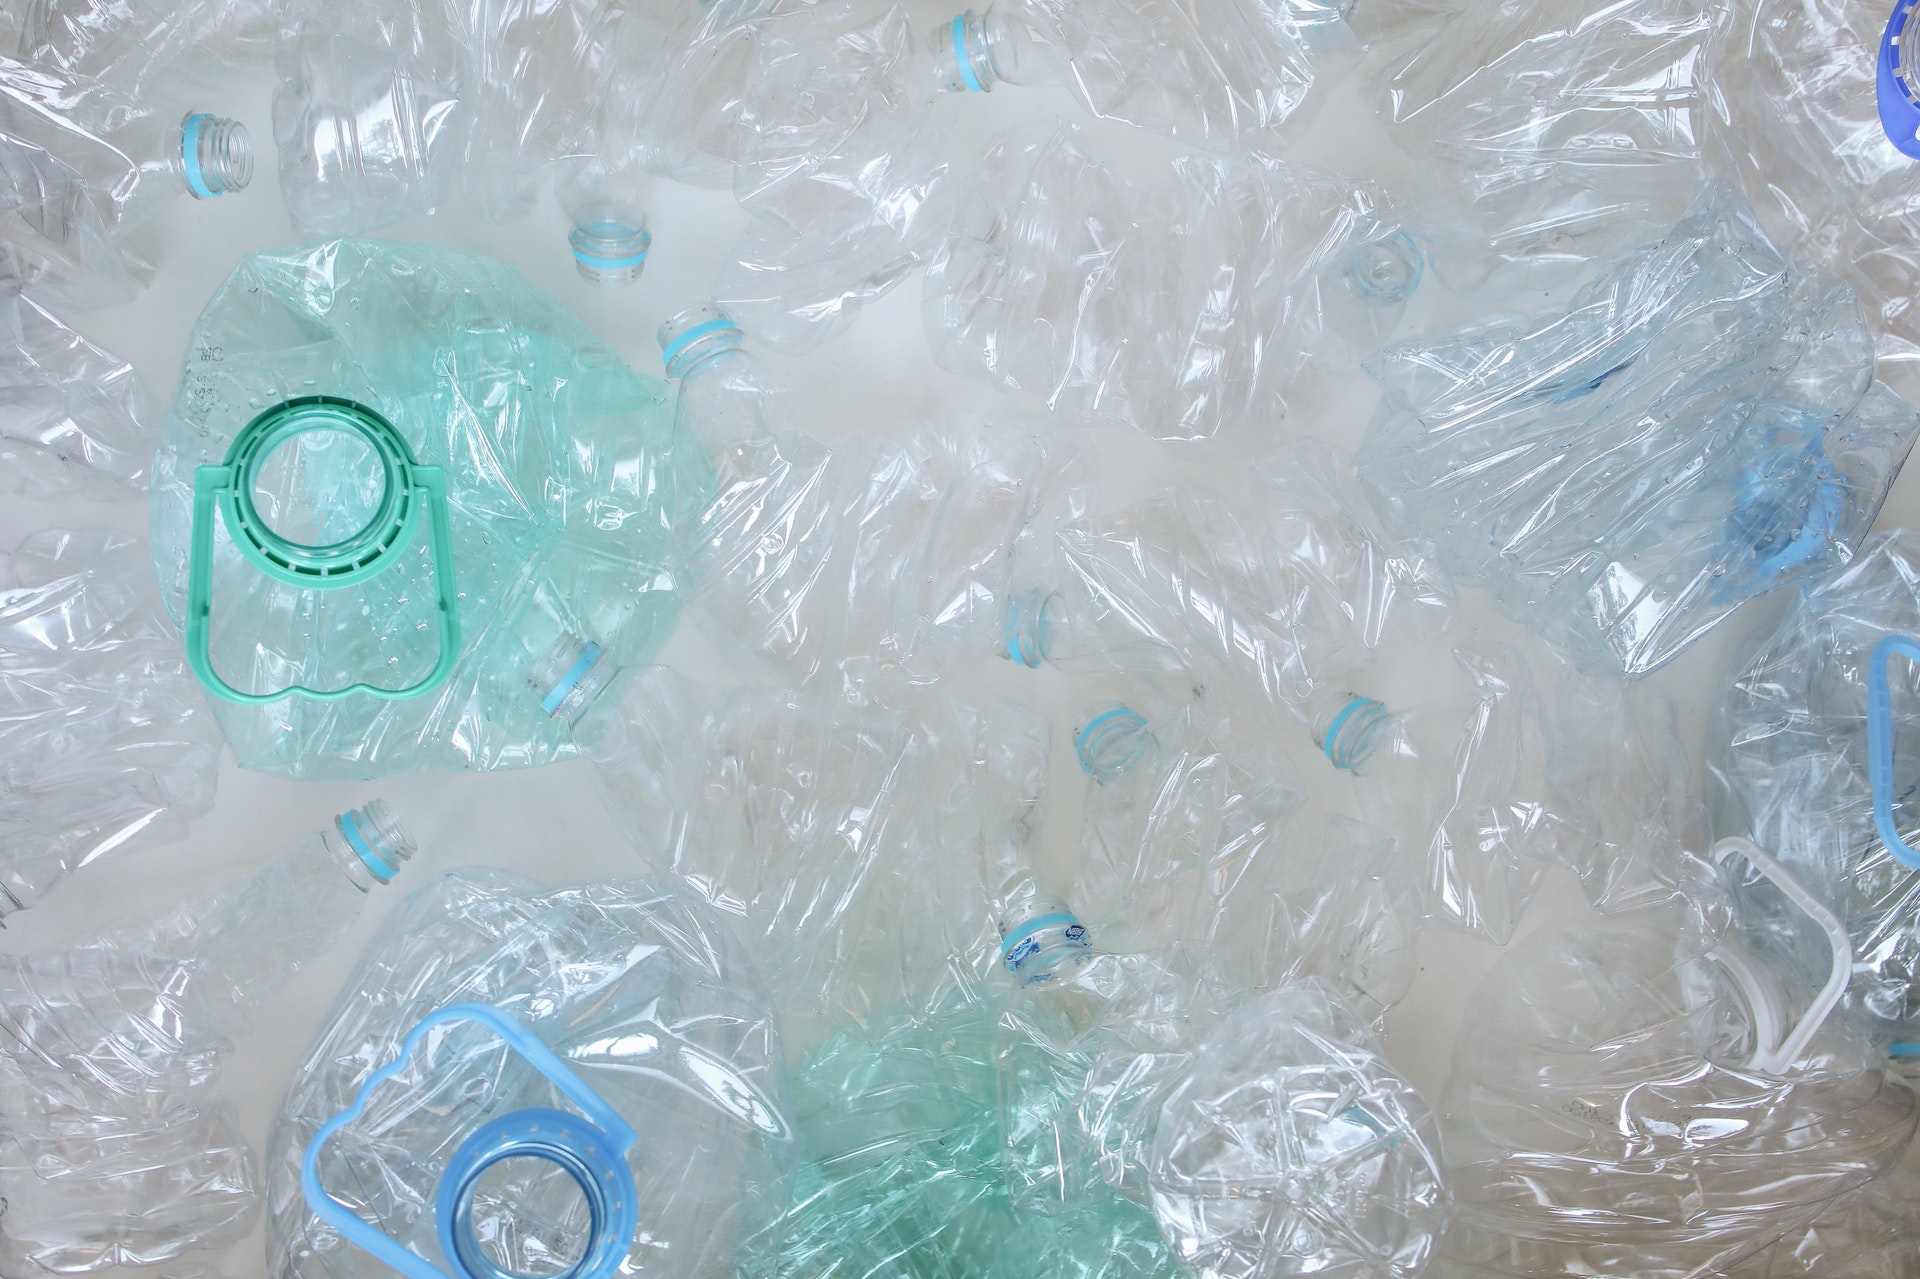 Valorisation of plastic waste through micro-organisms